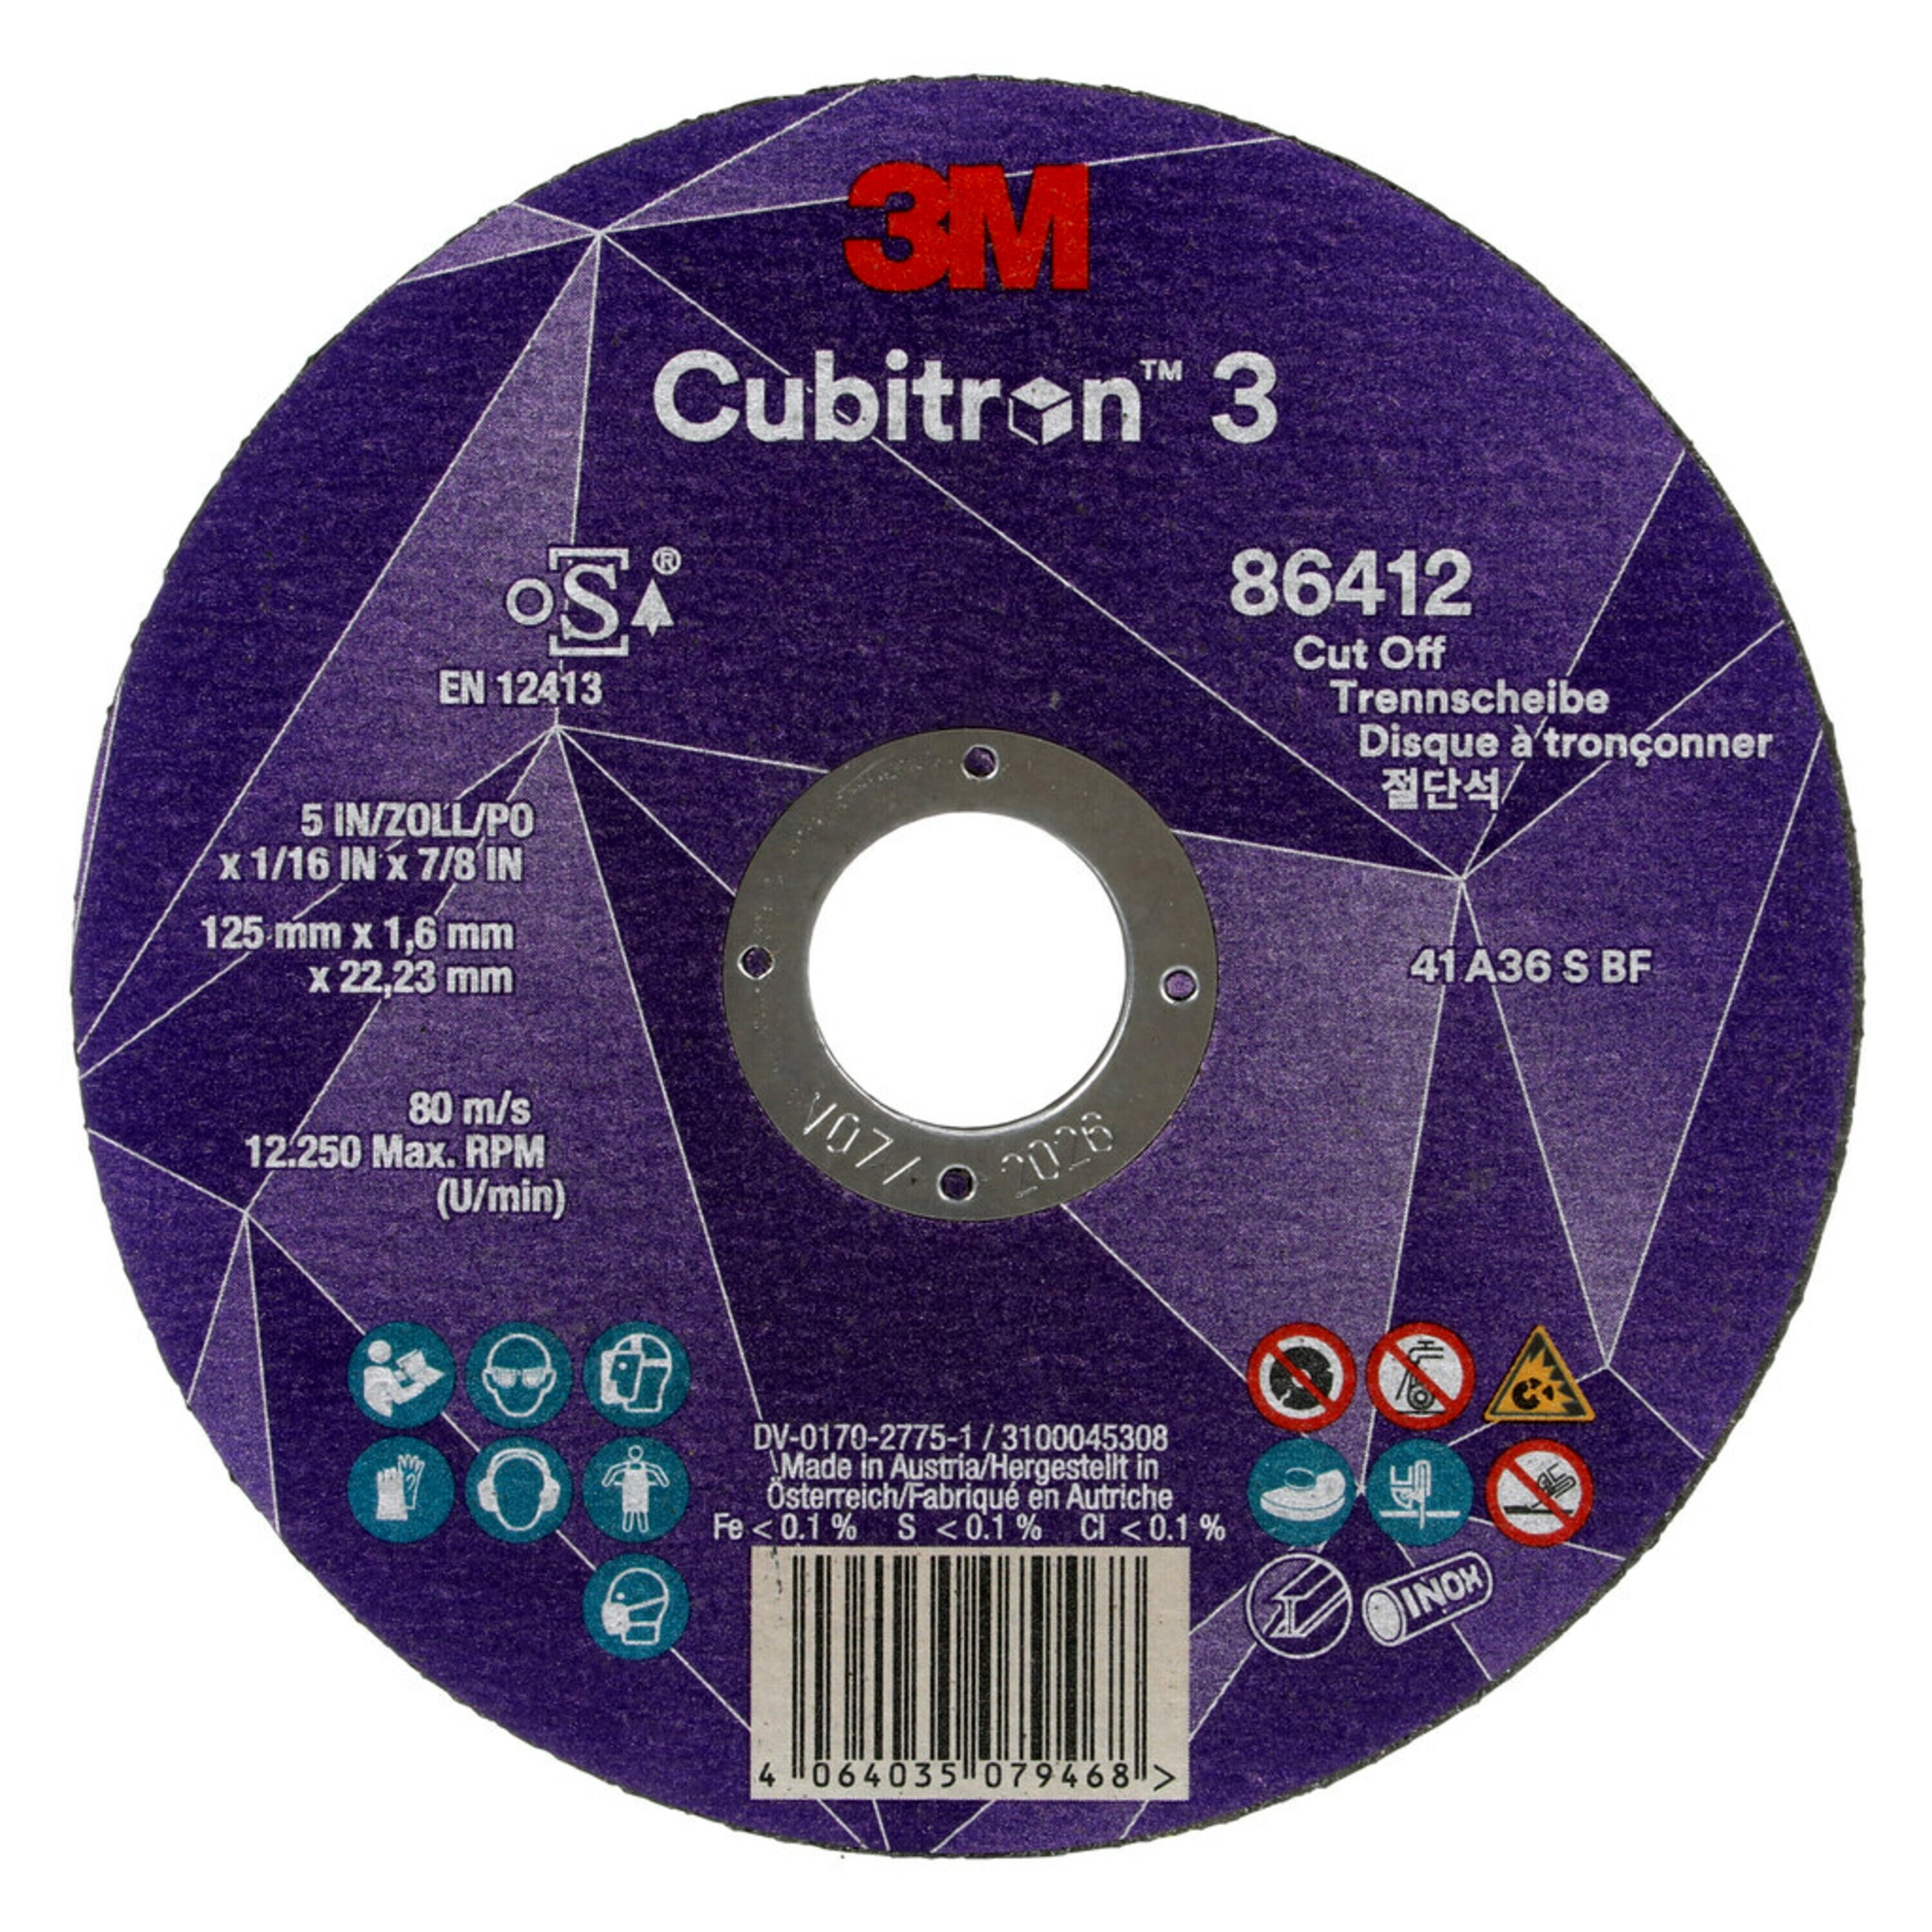 3M Cubitron 3 cut-off wheel, 125 mm, 1.6 mm 22.23 mm, 36 , type 41 #86412